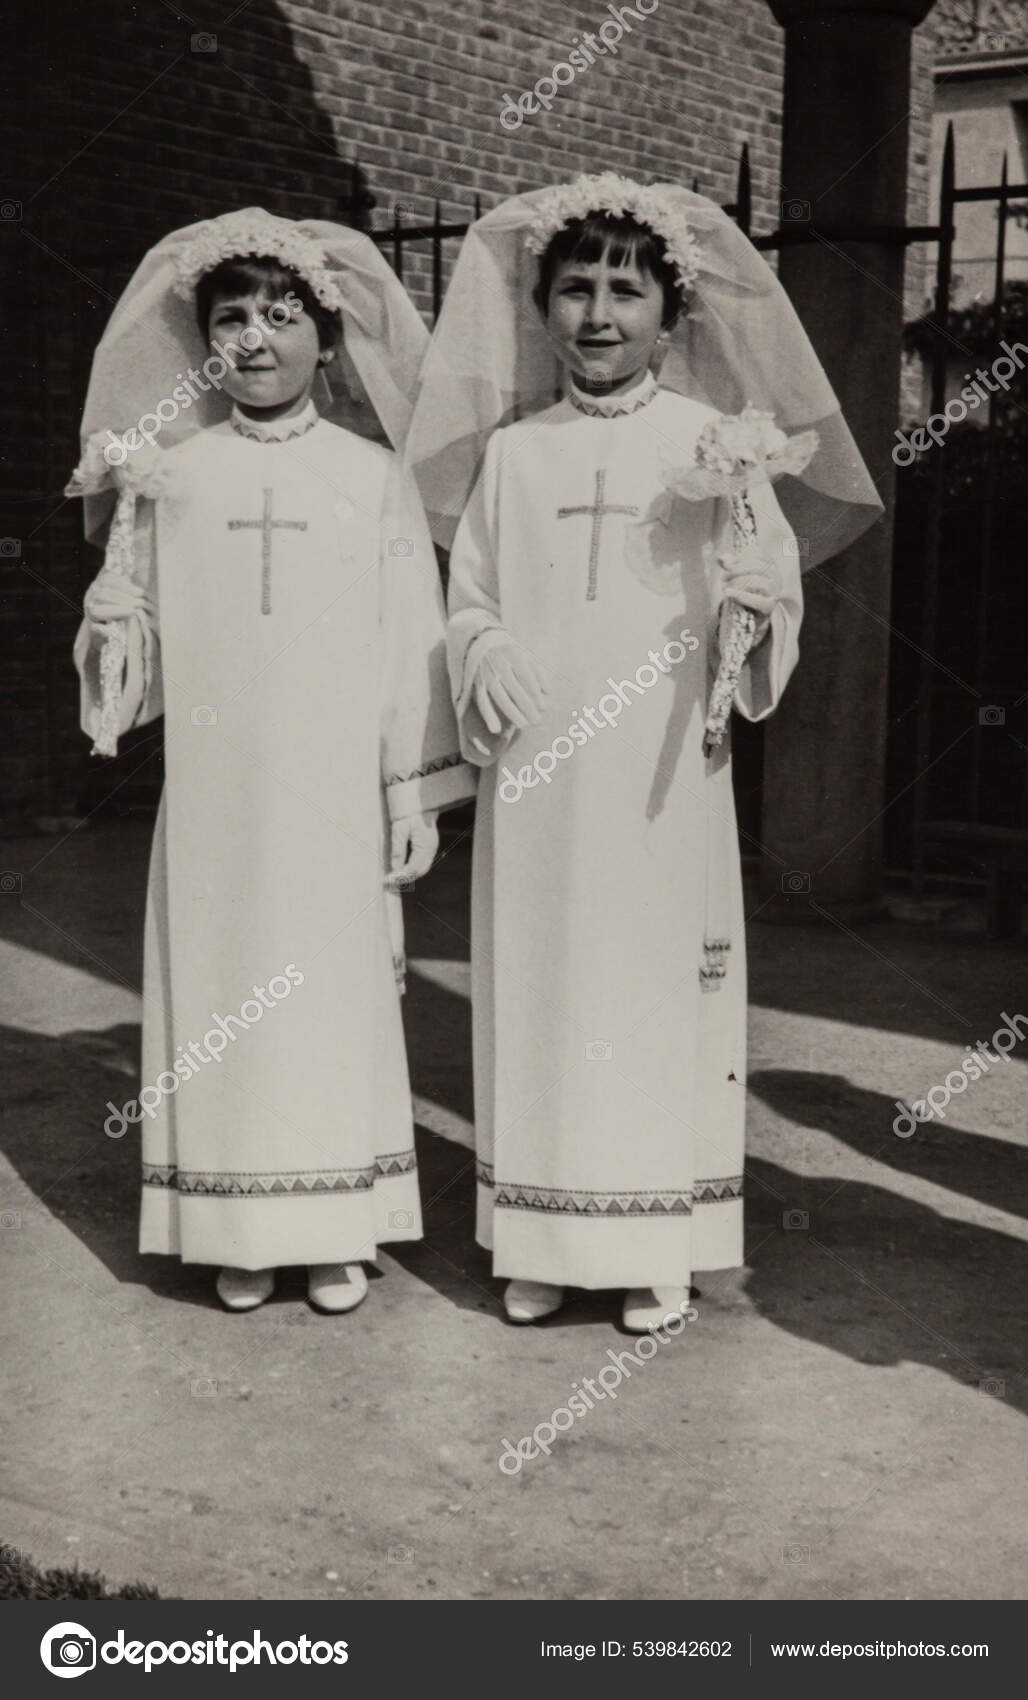 Del Ghebbo Italien 1964 Piger Kristent Religiøst Tøj – Redaktionelle Wirestock #539842602